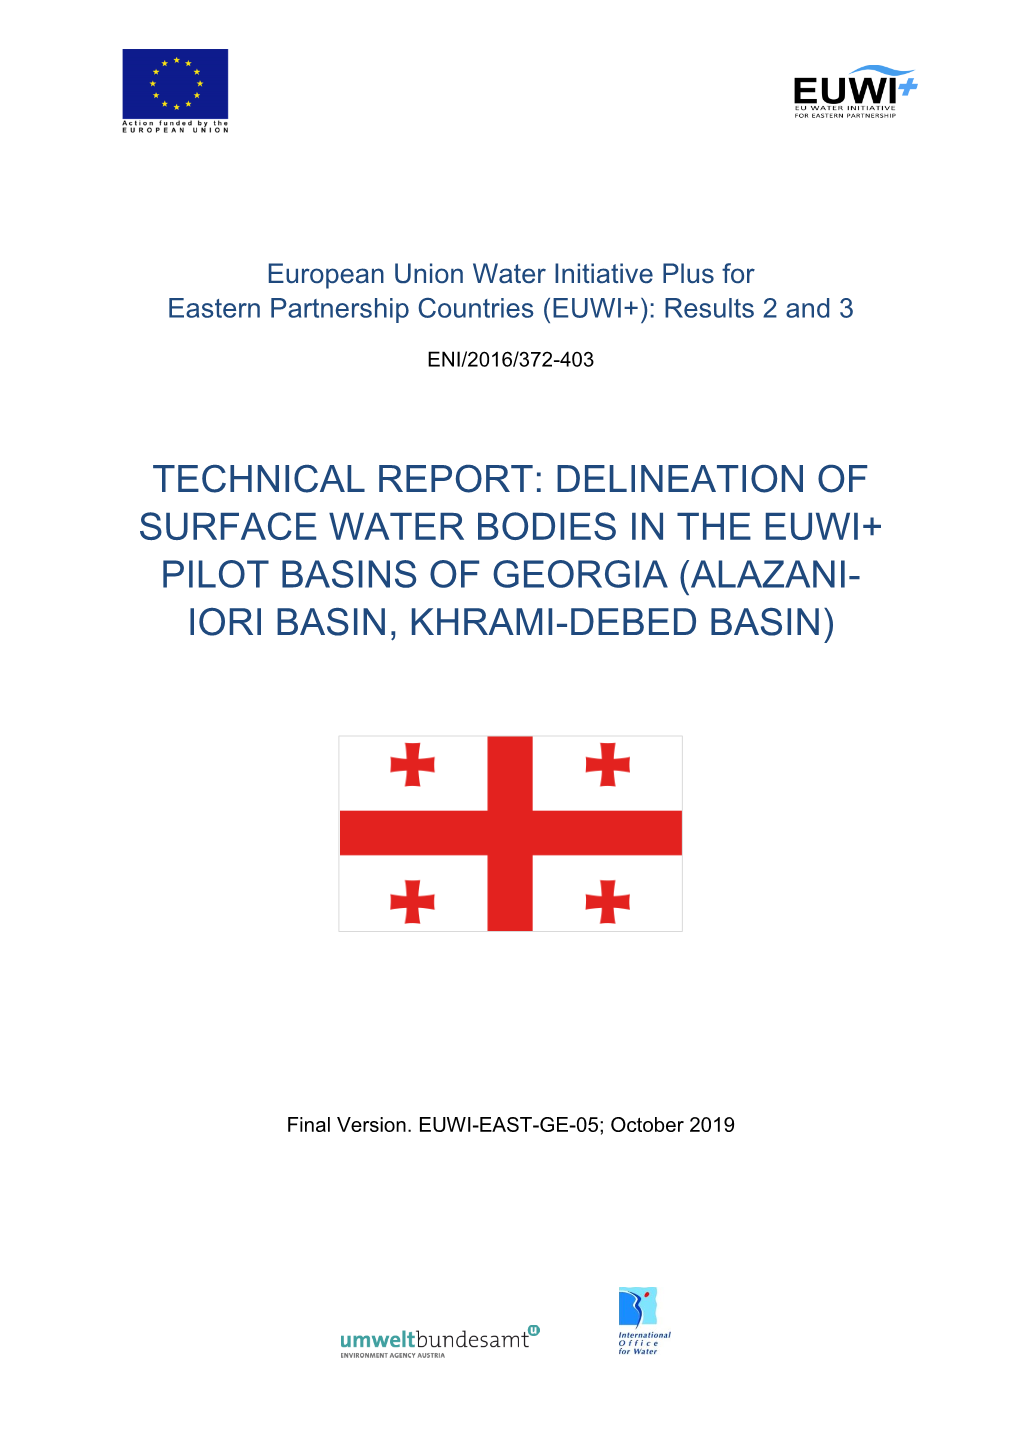 Technical Report: Delineation of Surface Water Bodies in the Euwi+ Pilot Basins of Georgia (Alazani- Iori Basin, Khrami-Debed Basin)